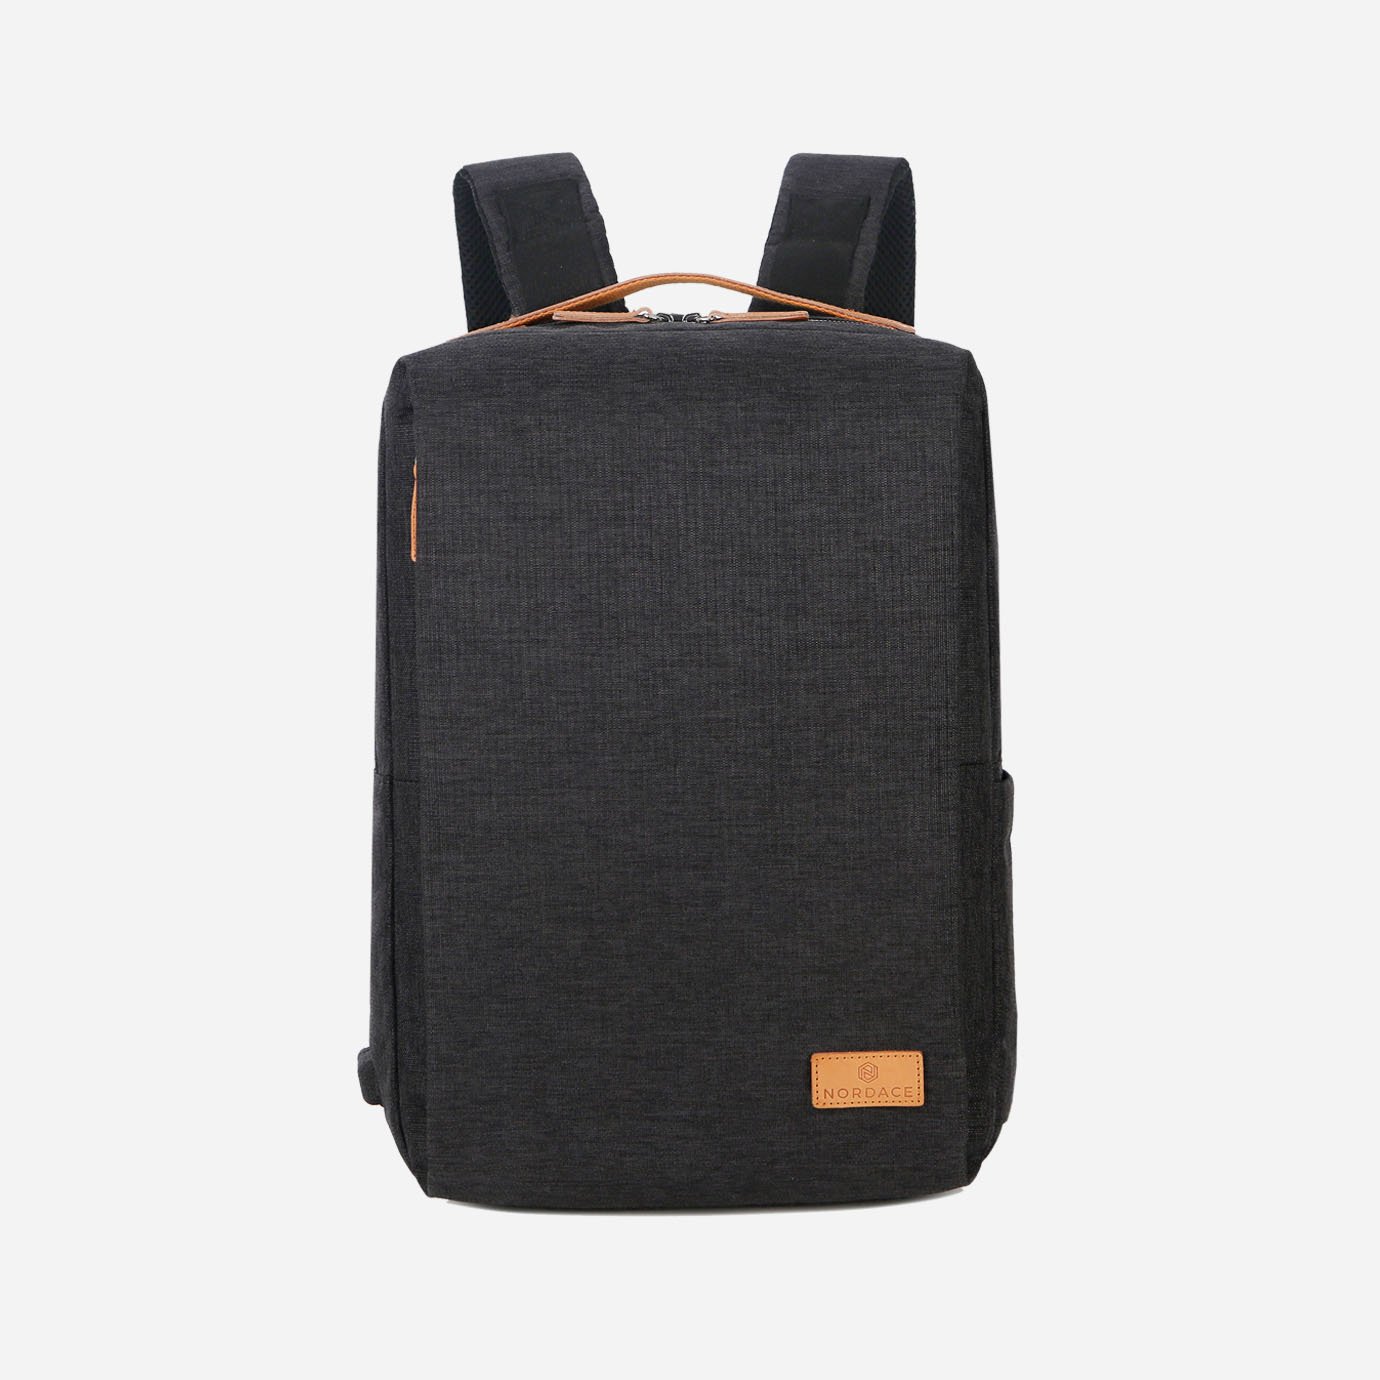 Horn Pelmel Odorless Nordace Siena - Smart Backpack